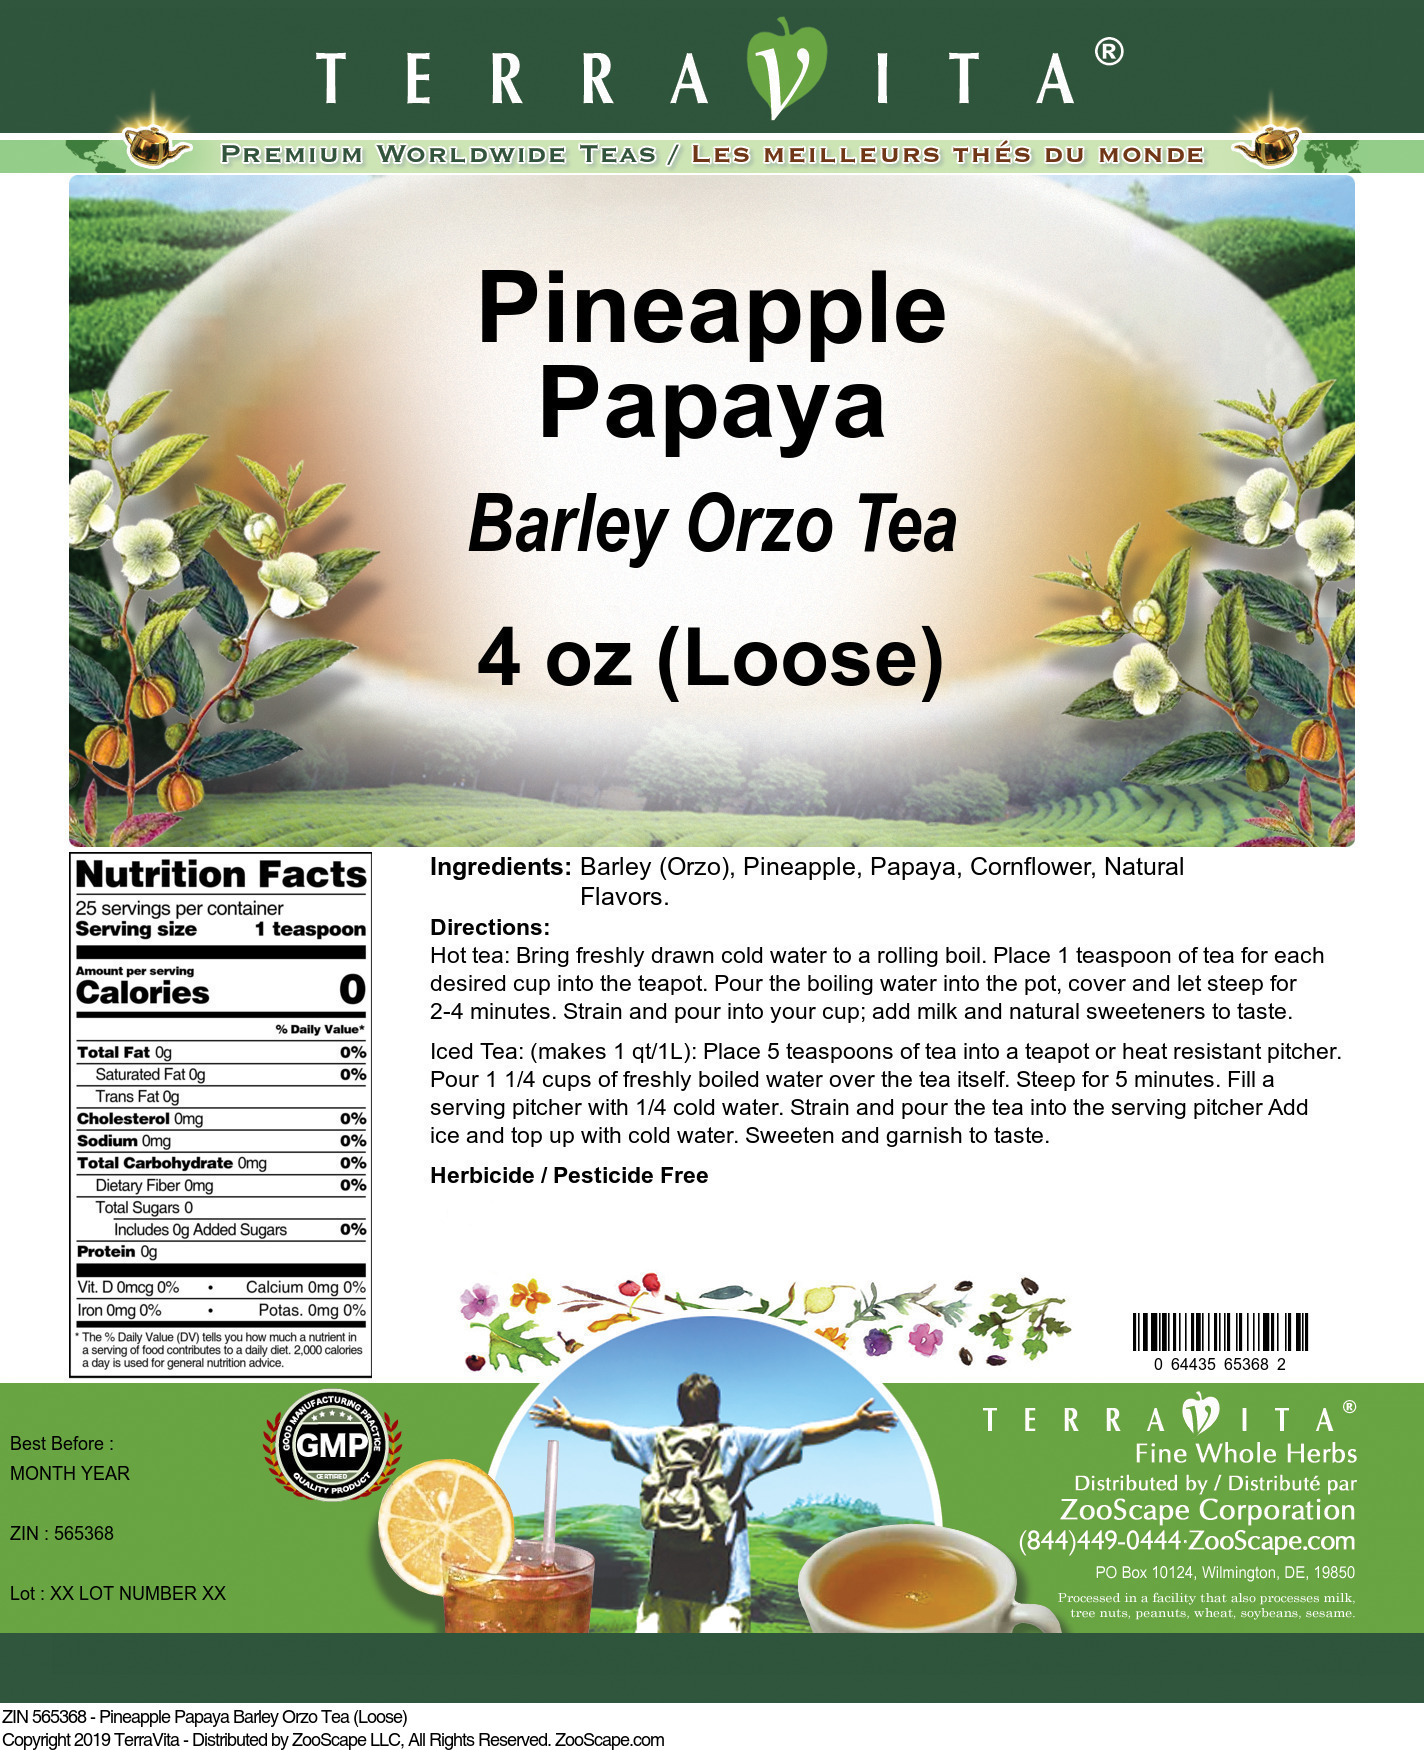 Pineapple Papaya Barley Orzo Tea (Loose) - Label